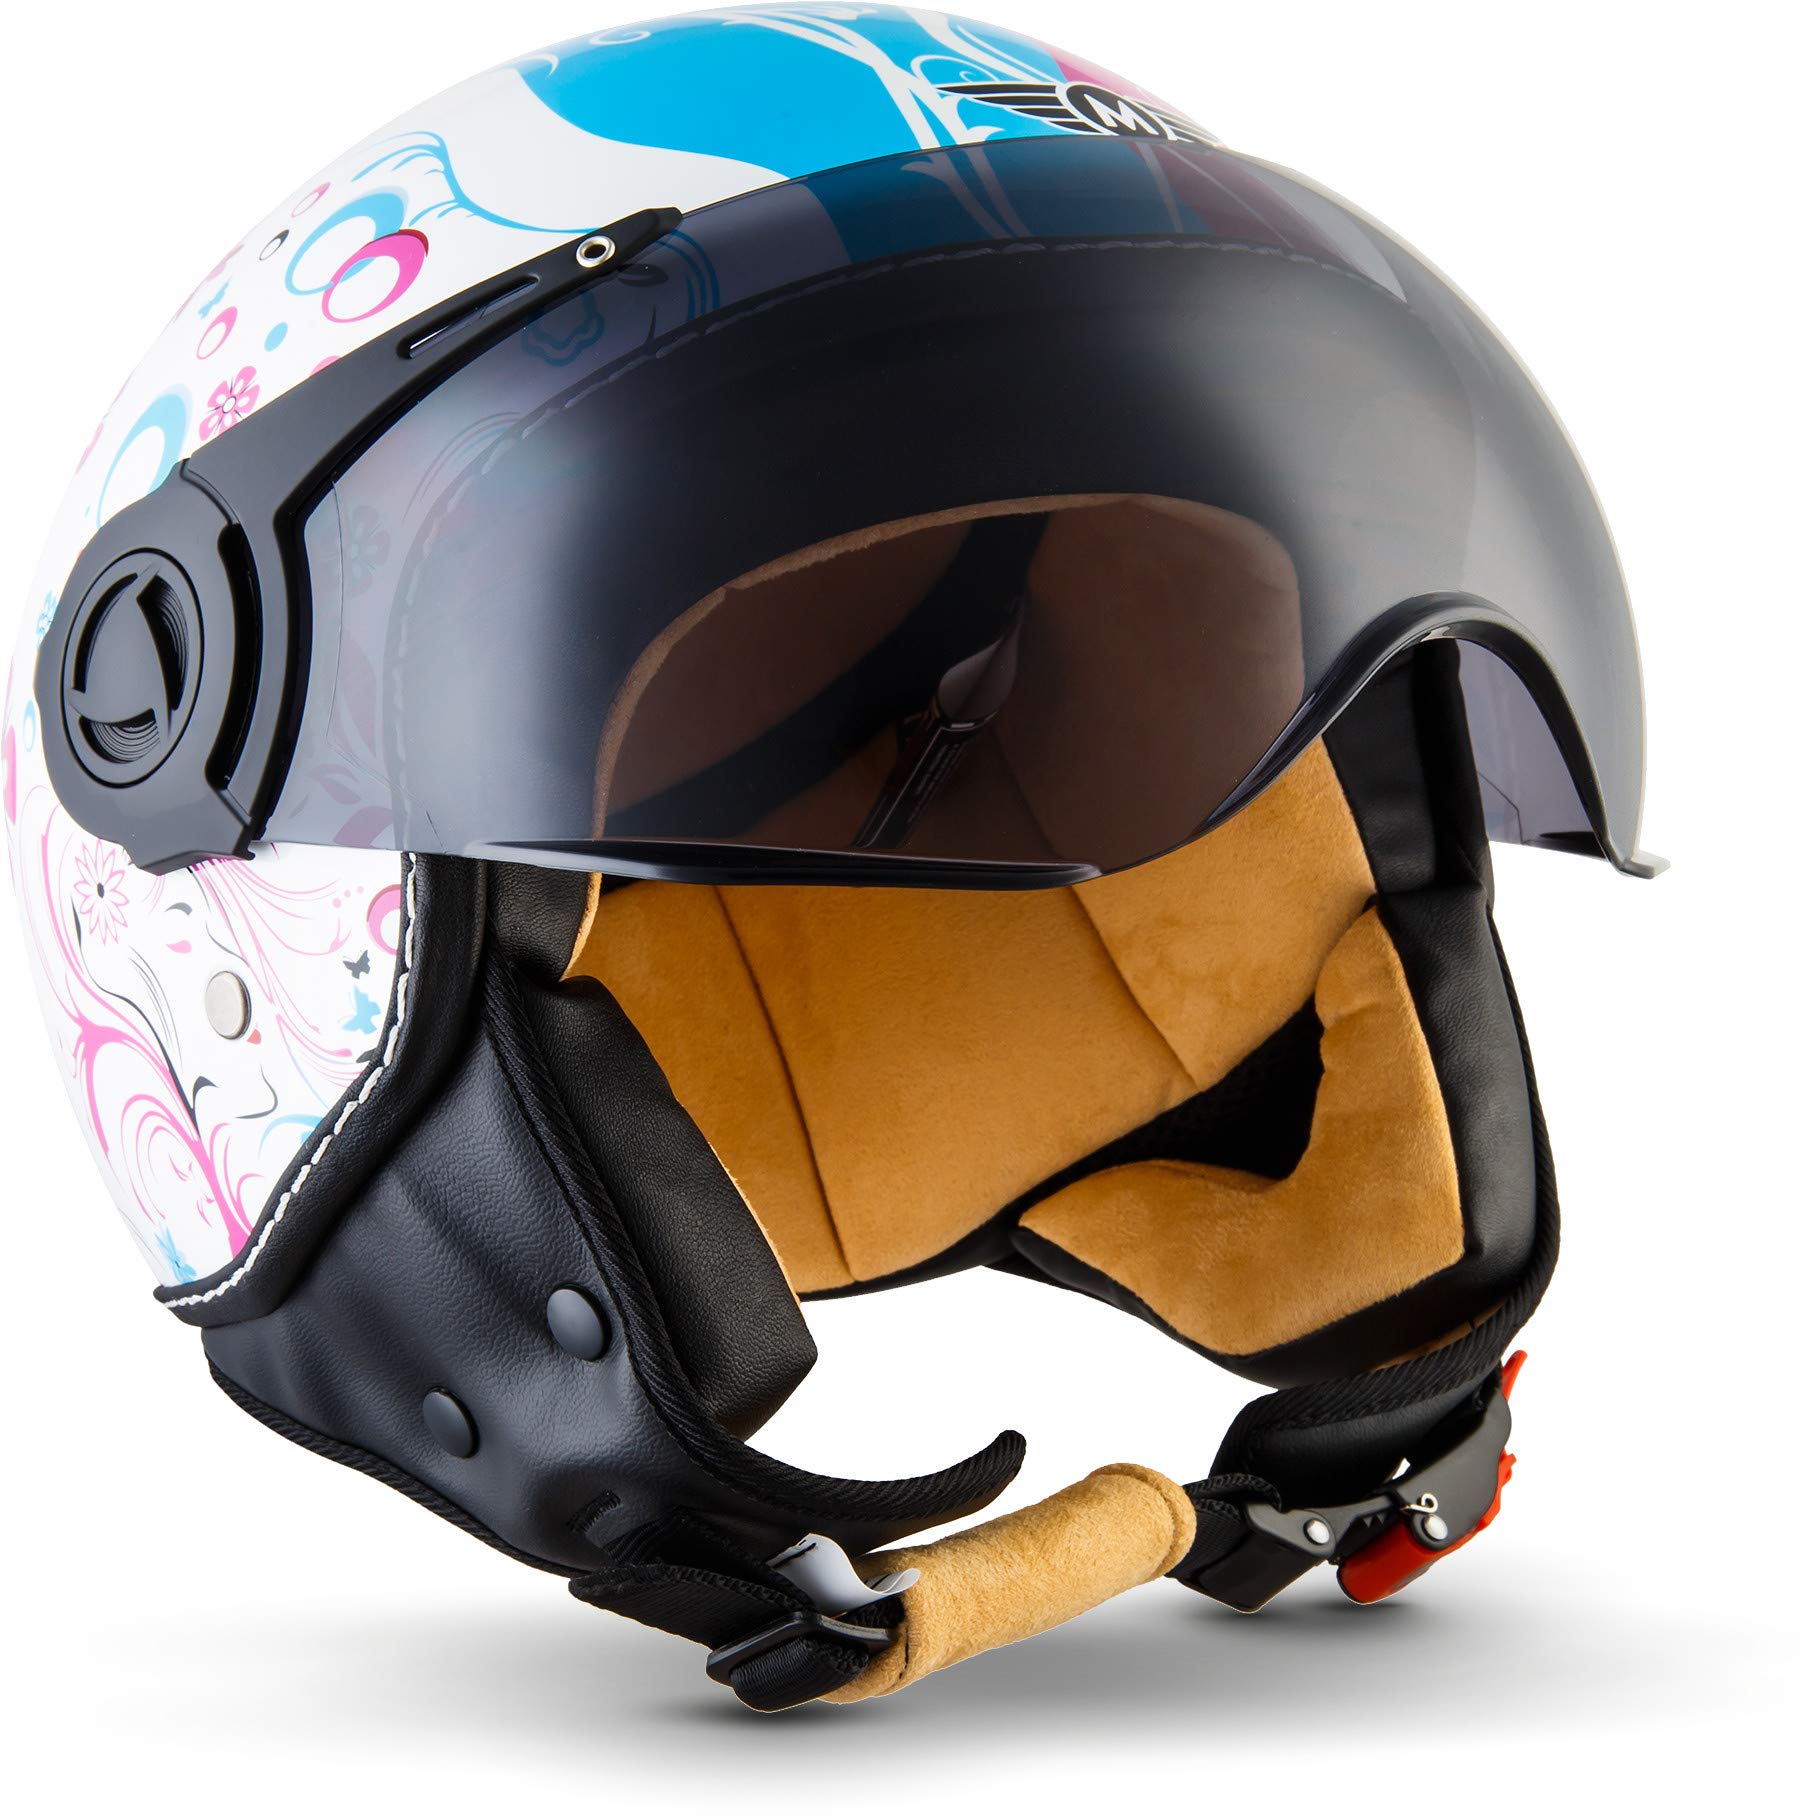 Moto Helmets® H44 „Flower“ · Jet-Helm · Motorrad-Helm Roller-Helm Scooter-Helm Bobber Mofa-Helm Chopper Retro Cruiser Vintage Pilot Biker Helmet · ECE Visier Schnellverschluss Tasche L (59-60cm)